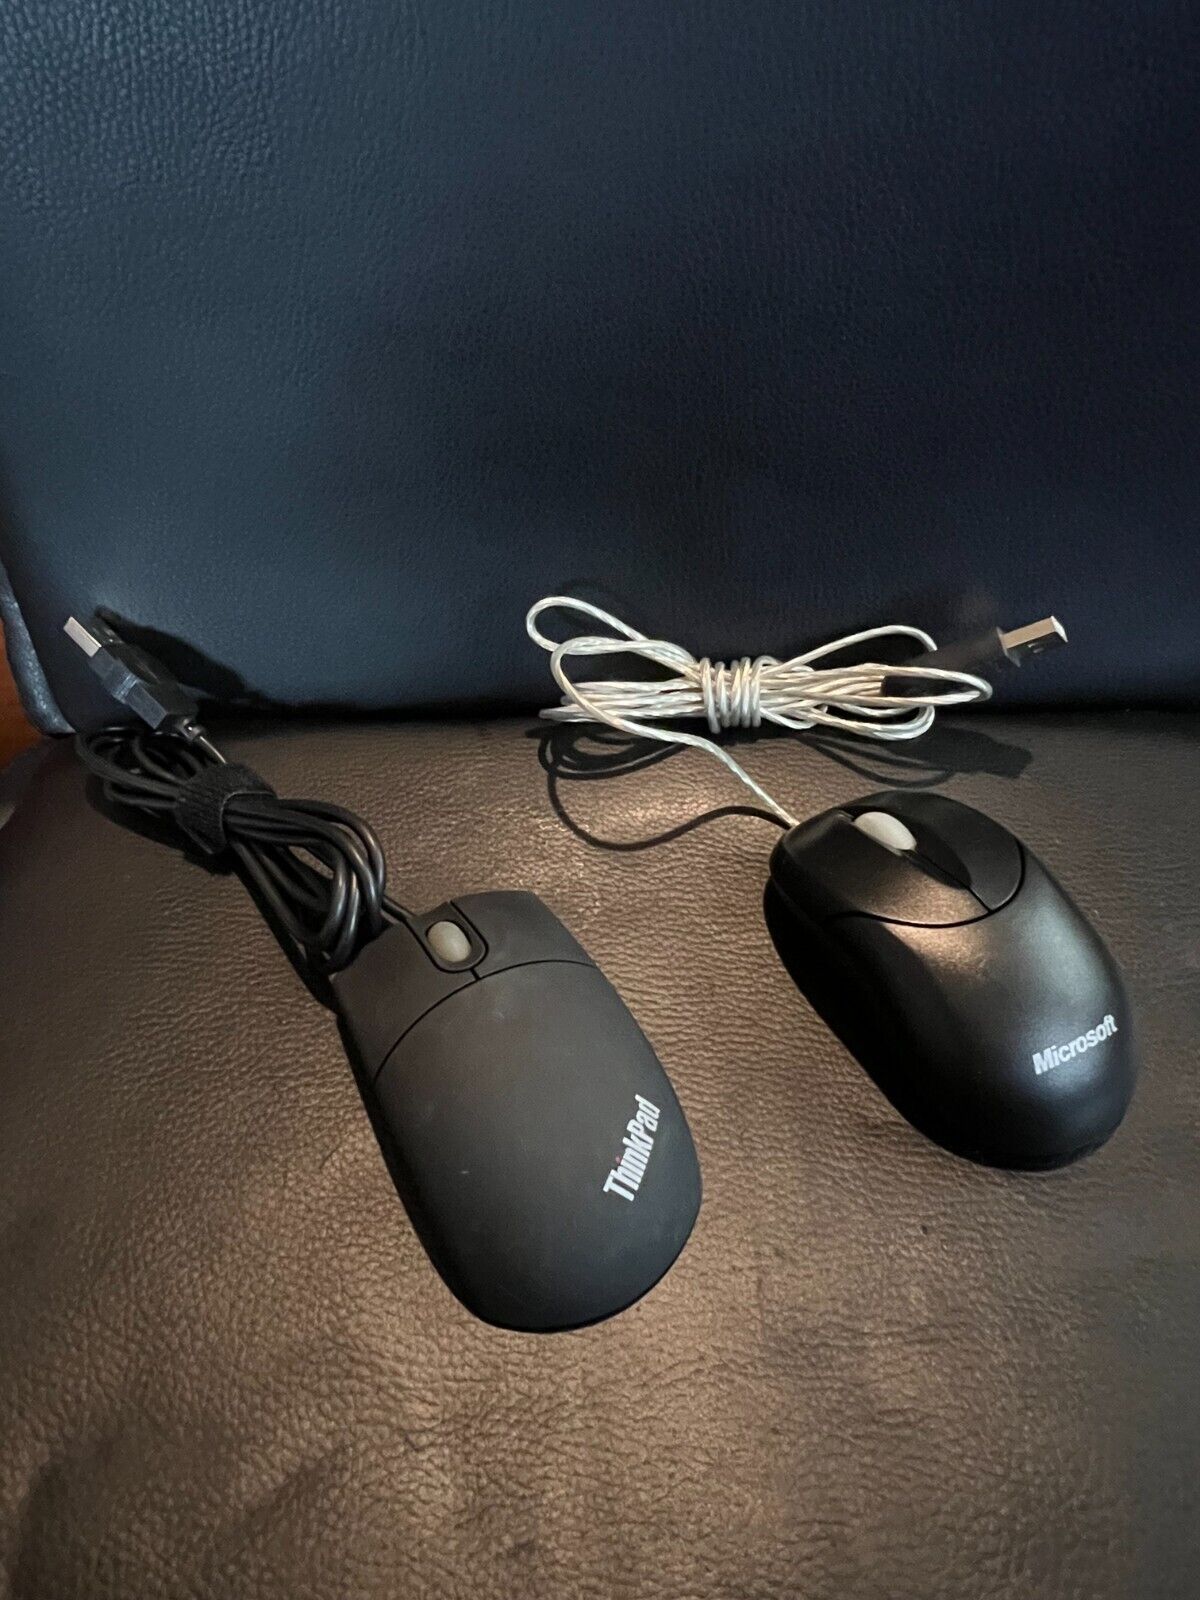 Travel Size Mouse - Lot of 2 - Name Brand Microsoft & Lenovo